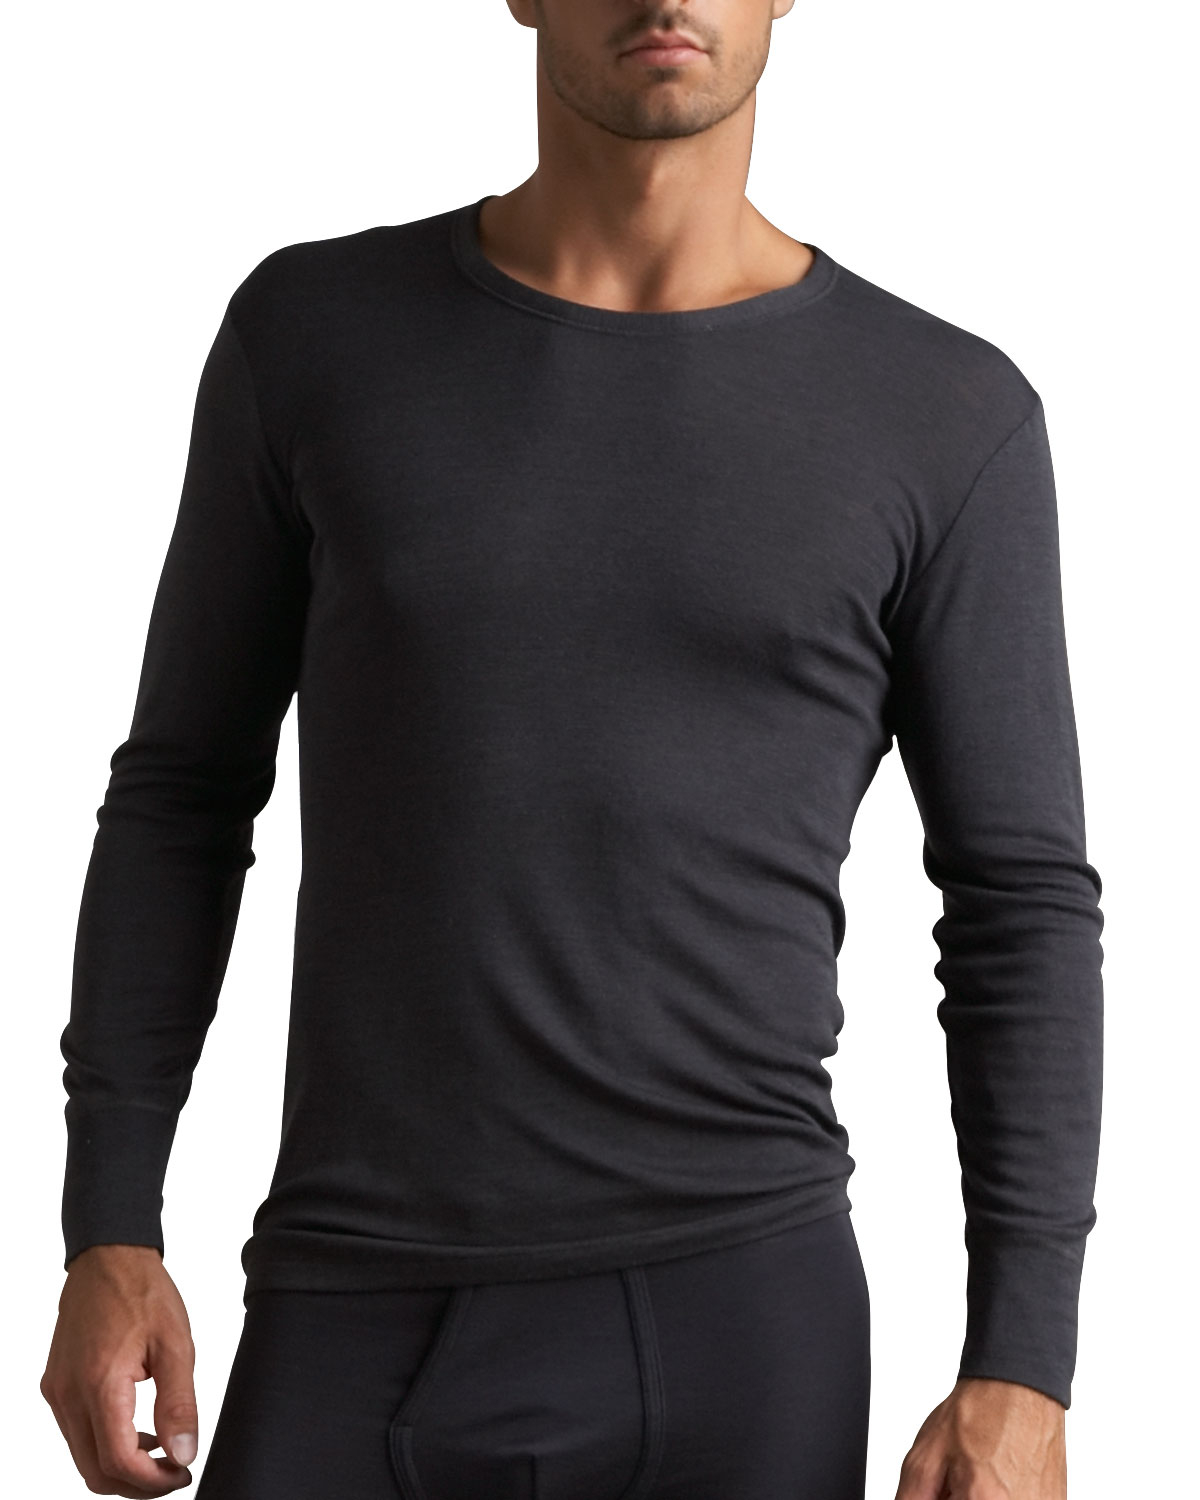 Lyst - Hanro Woolen Silk Thermal Shirt in Gray for Men